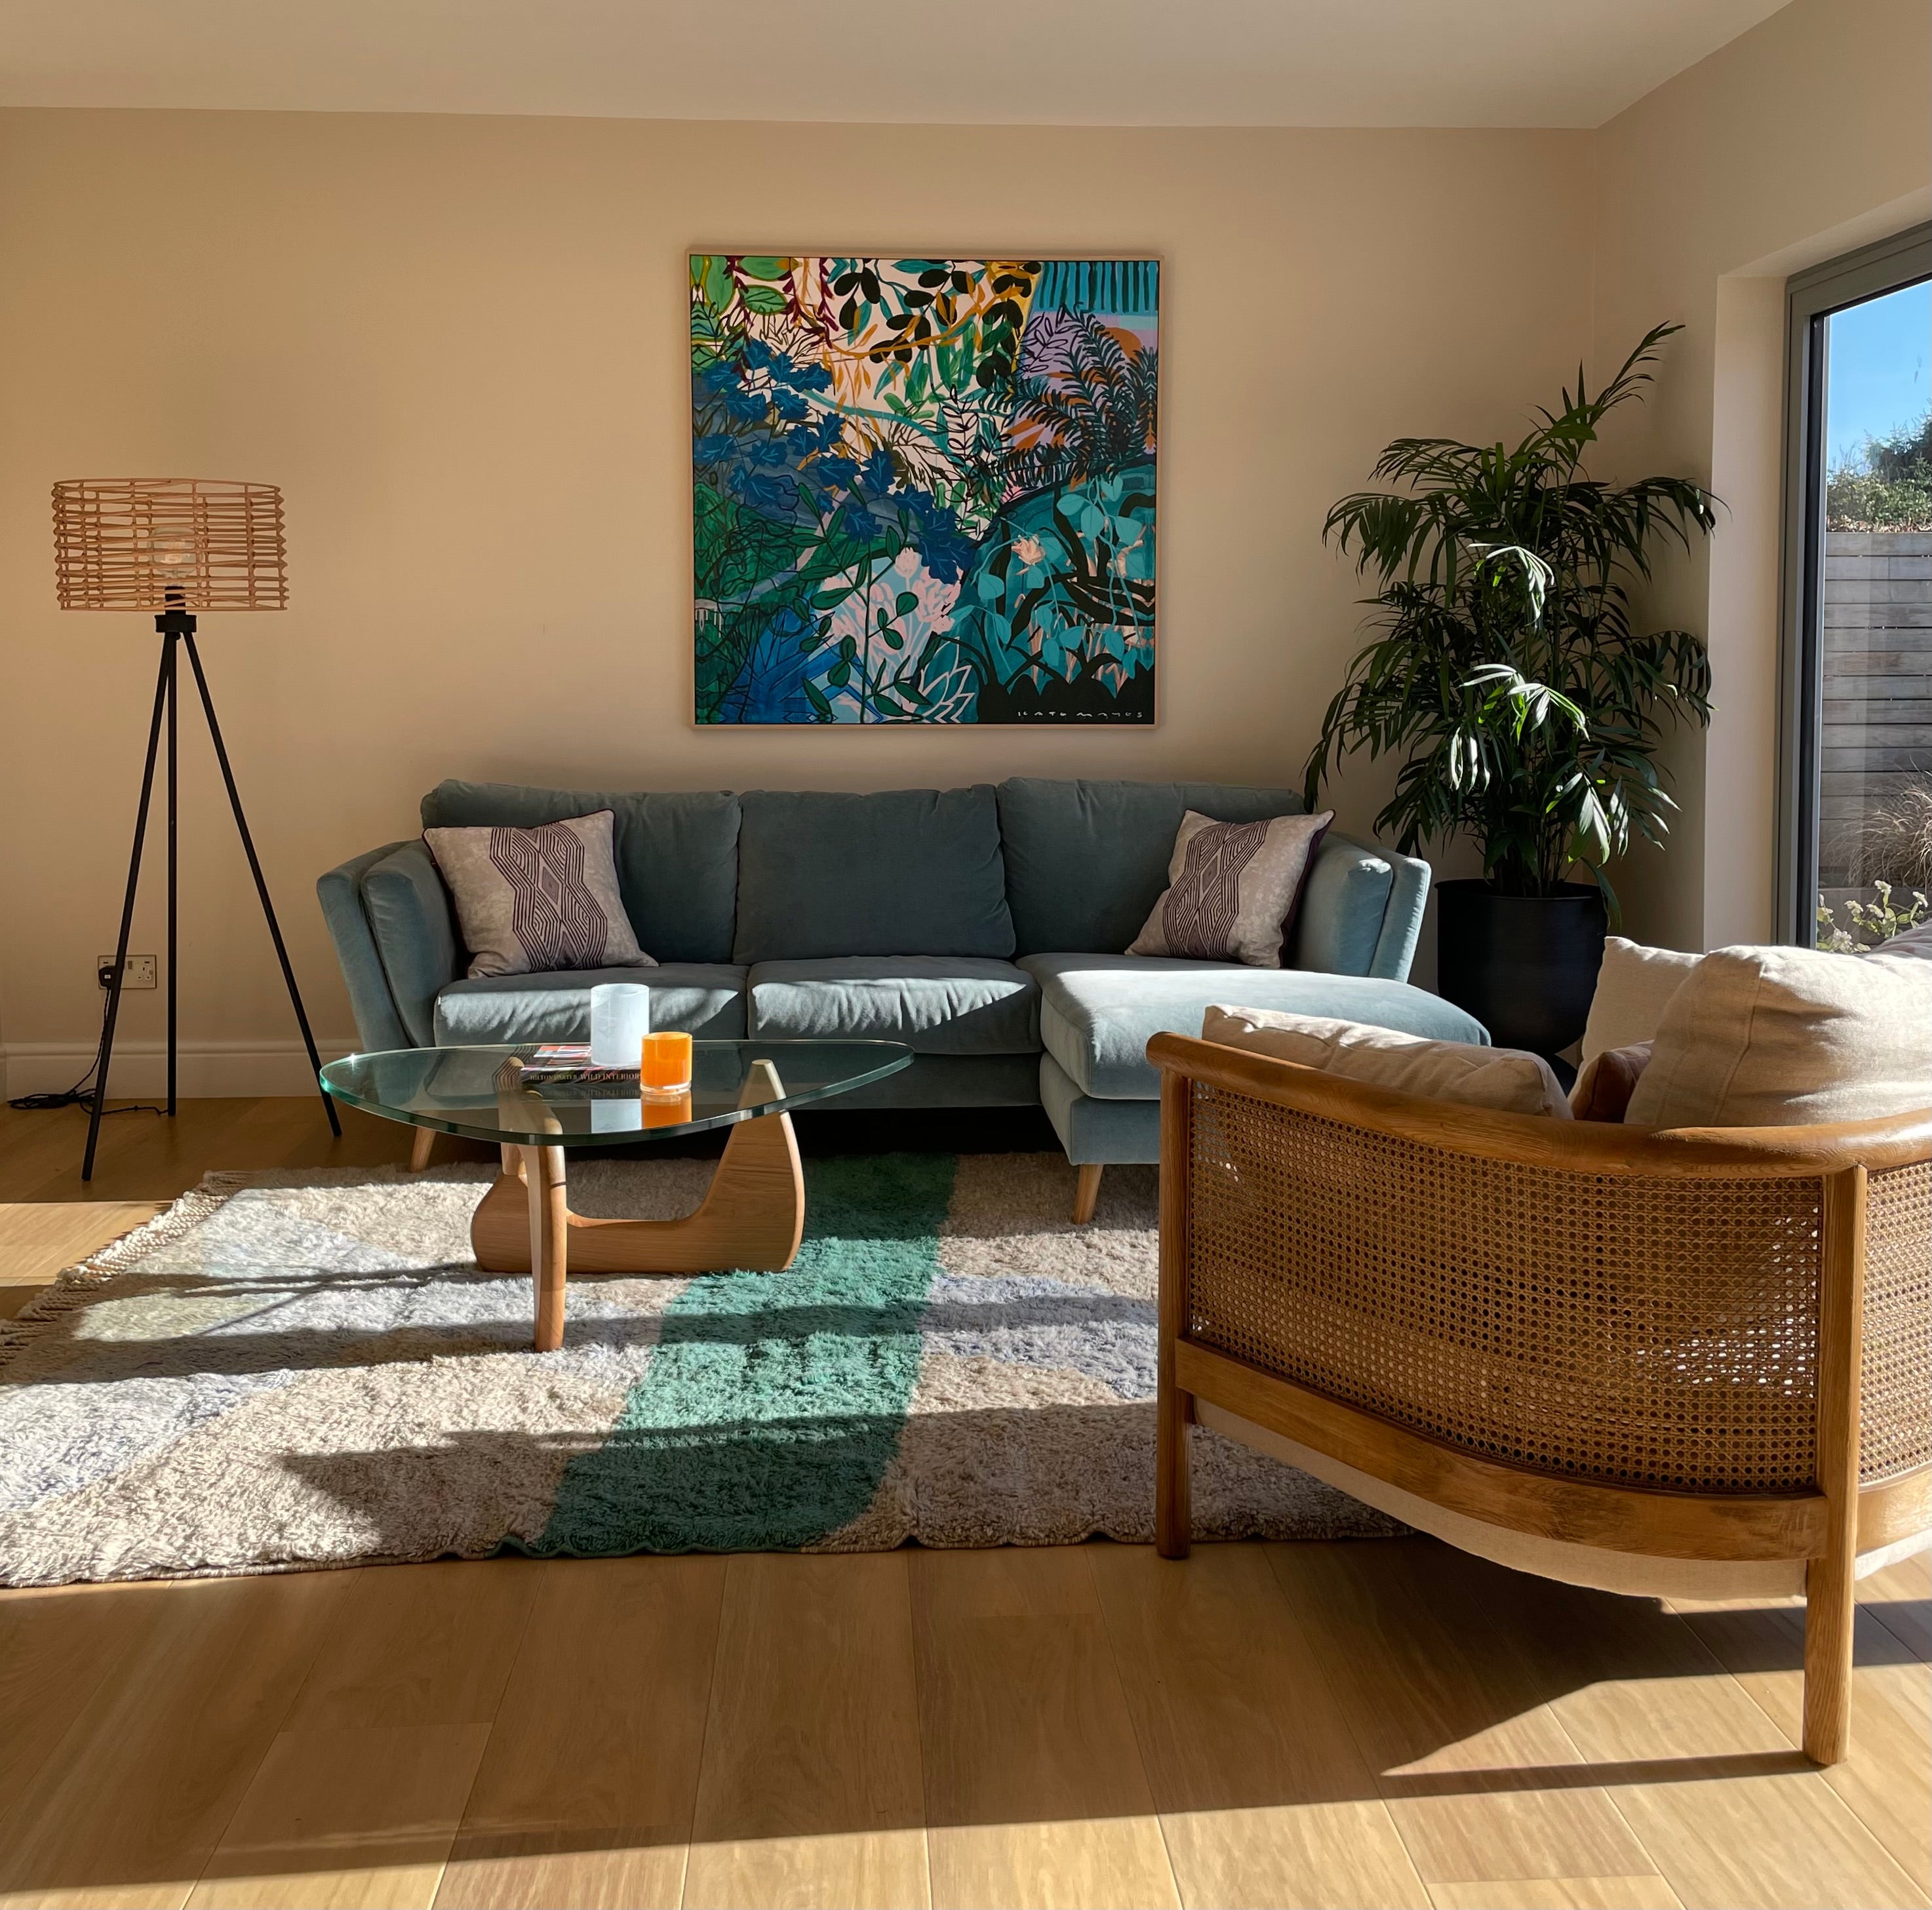 Interior design, living room